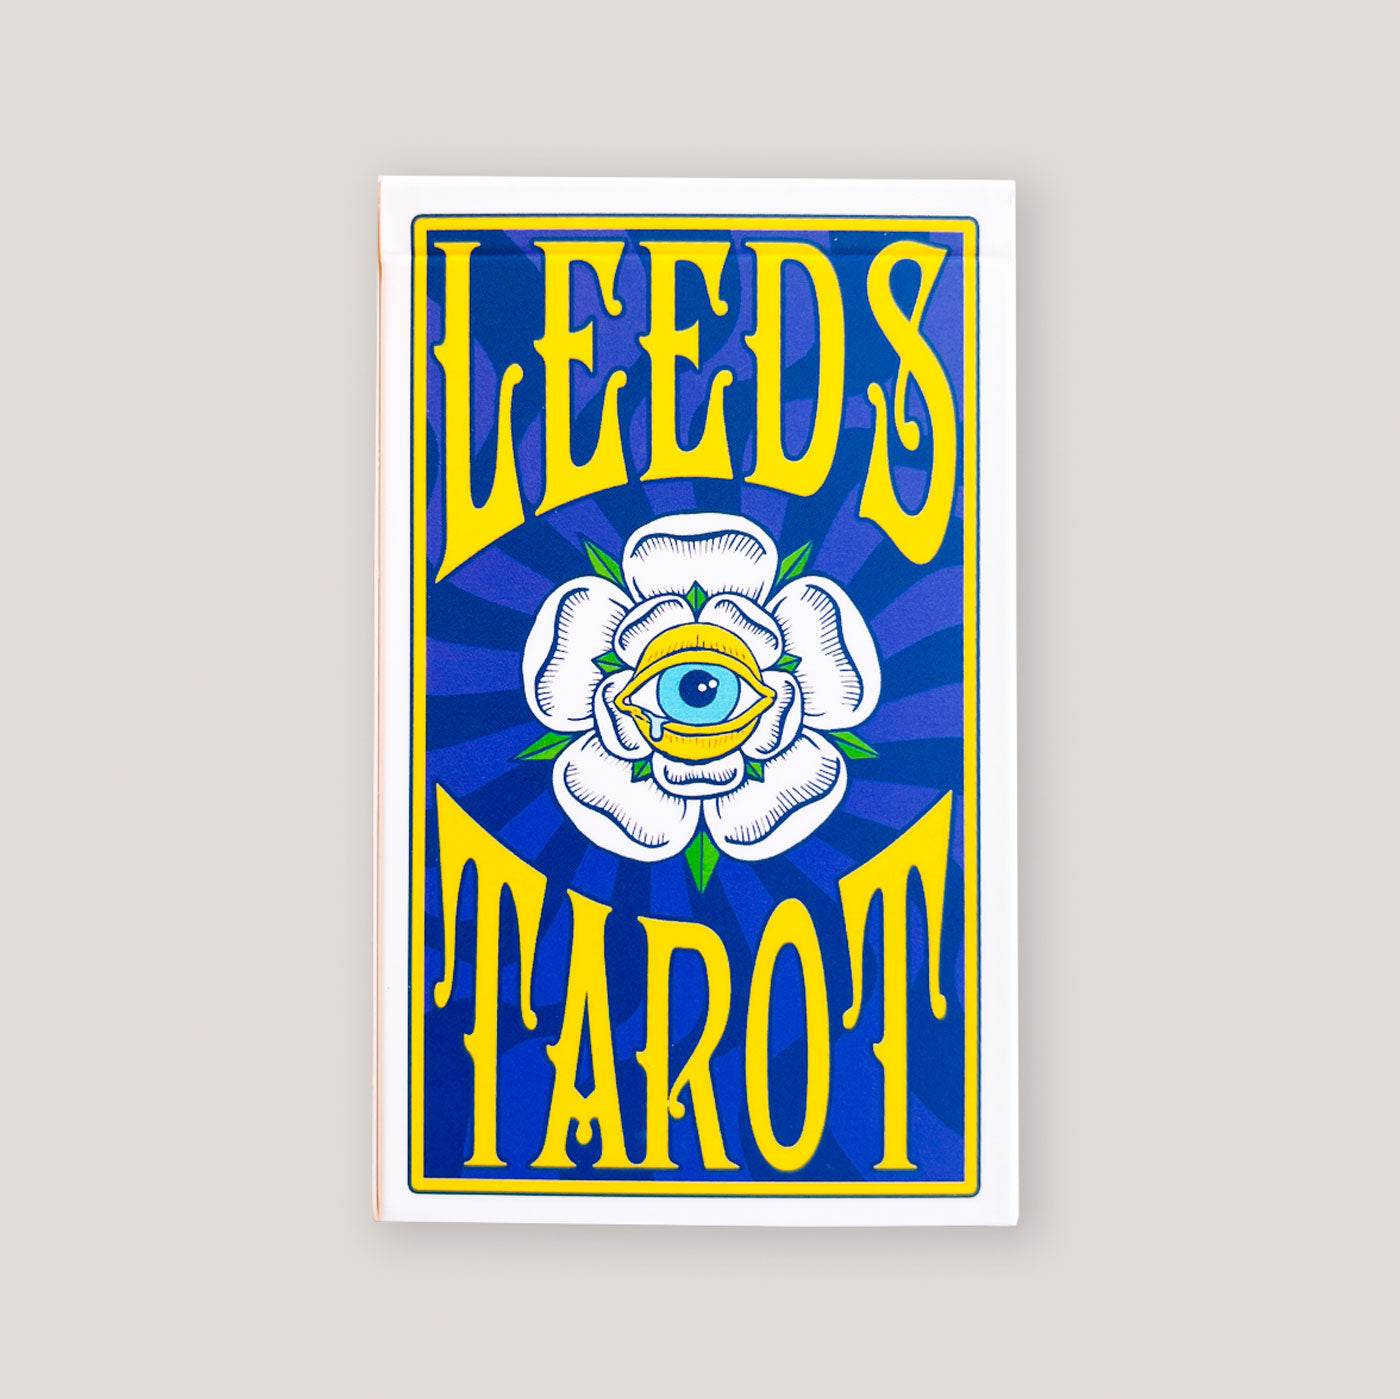 Leeds Tarot - 78 Cards by 78 Artists